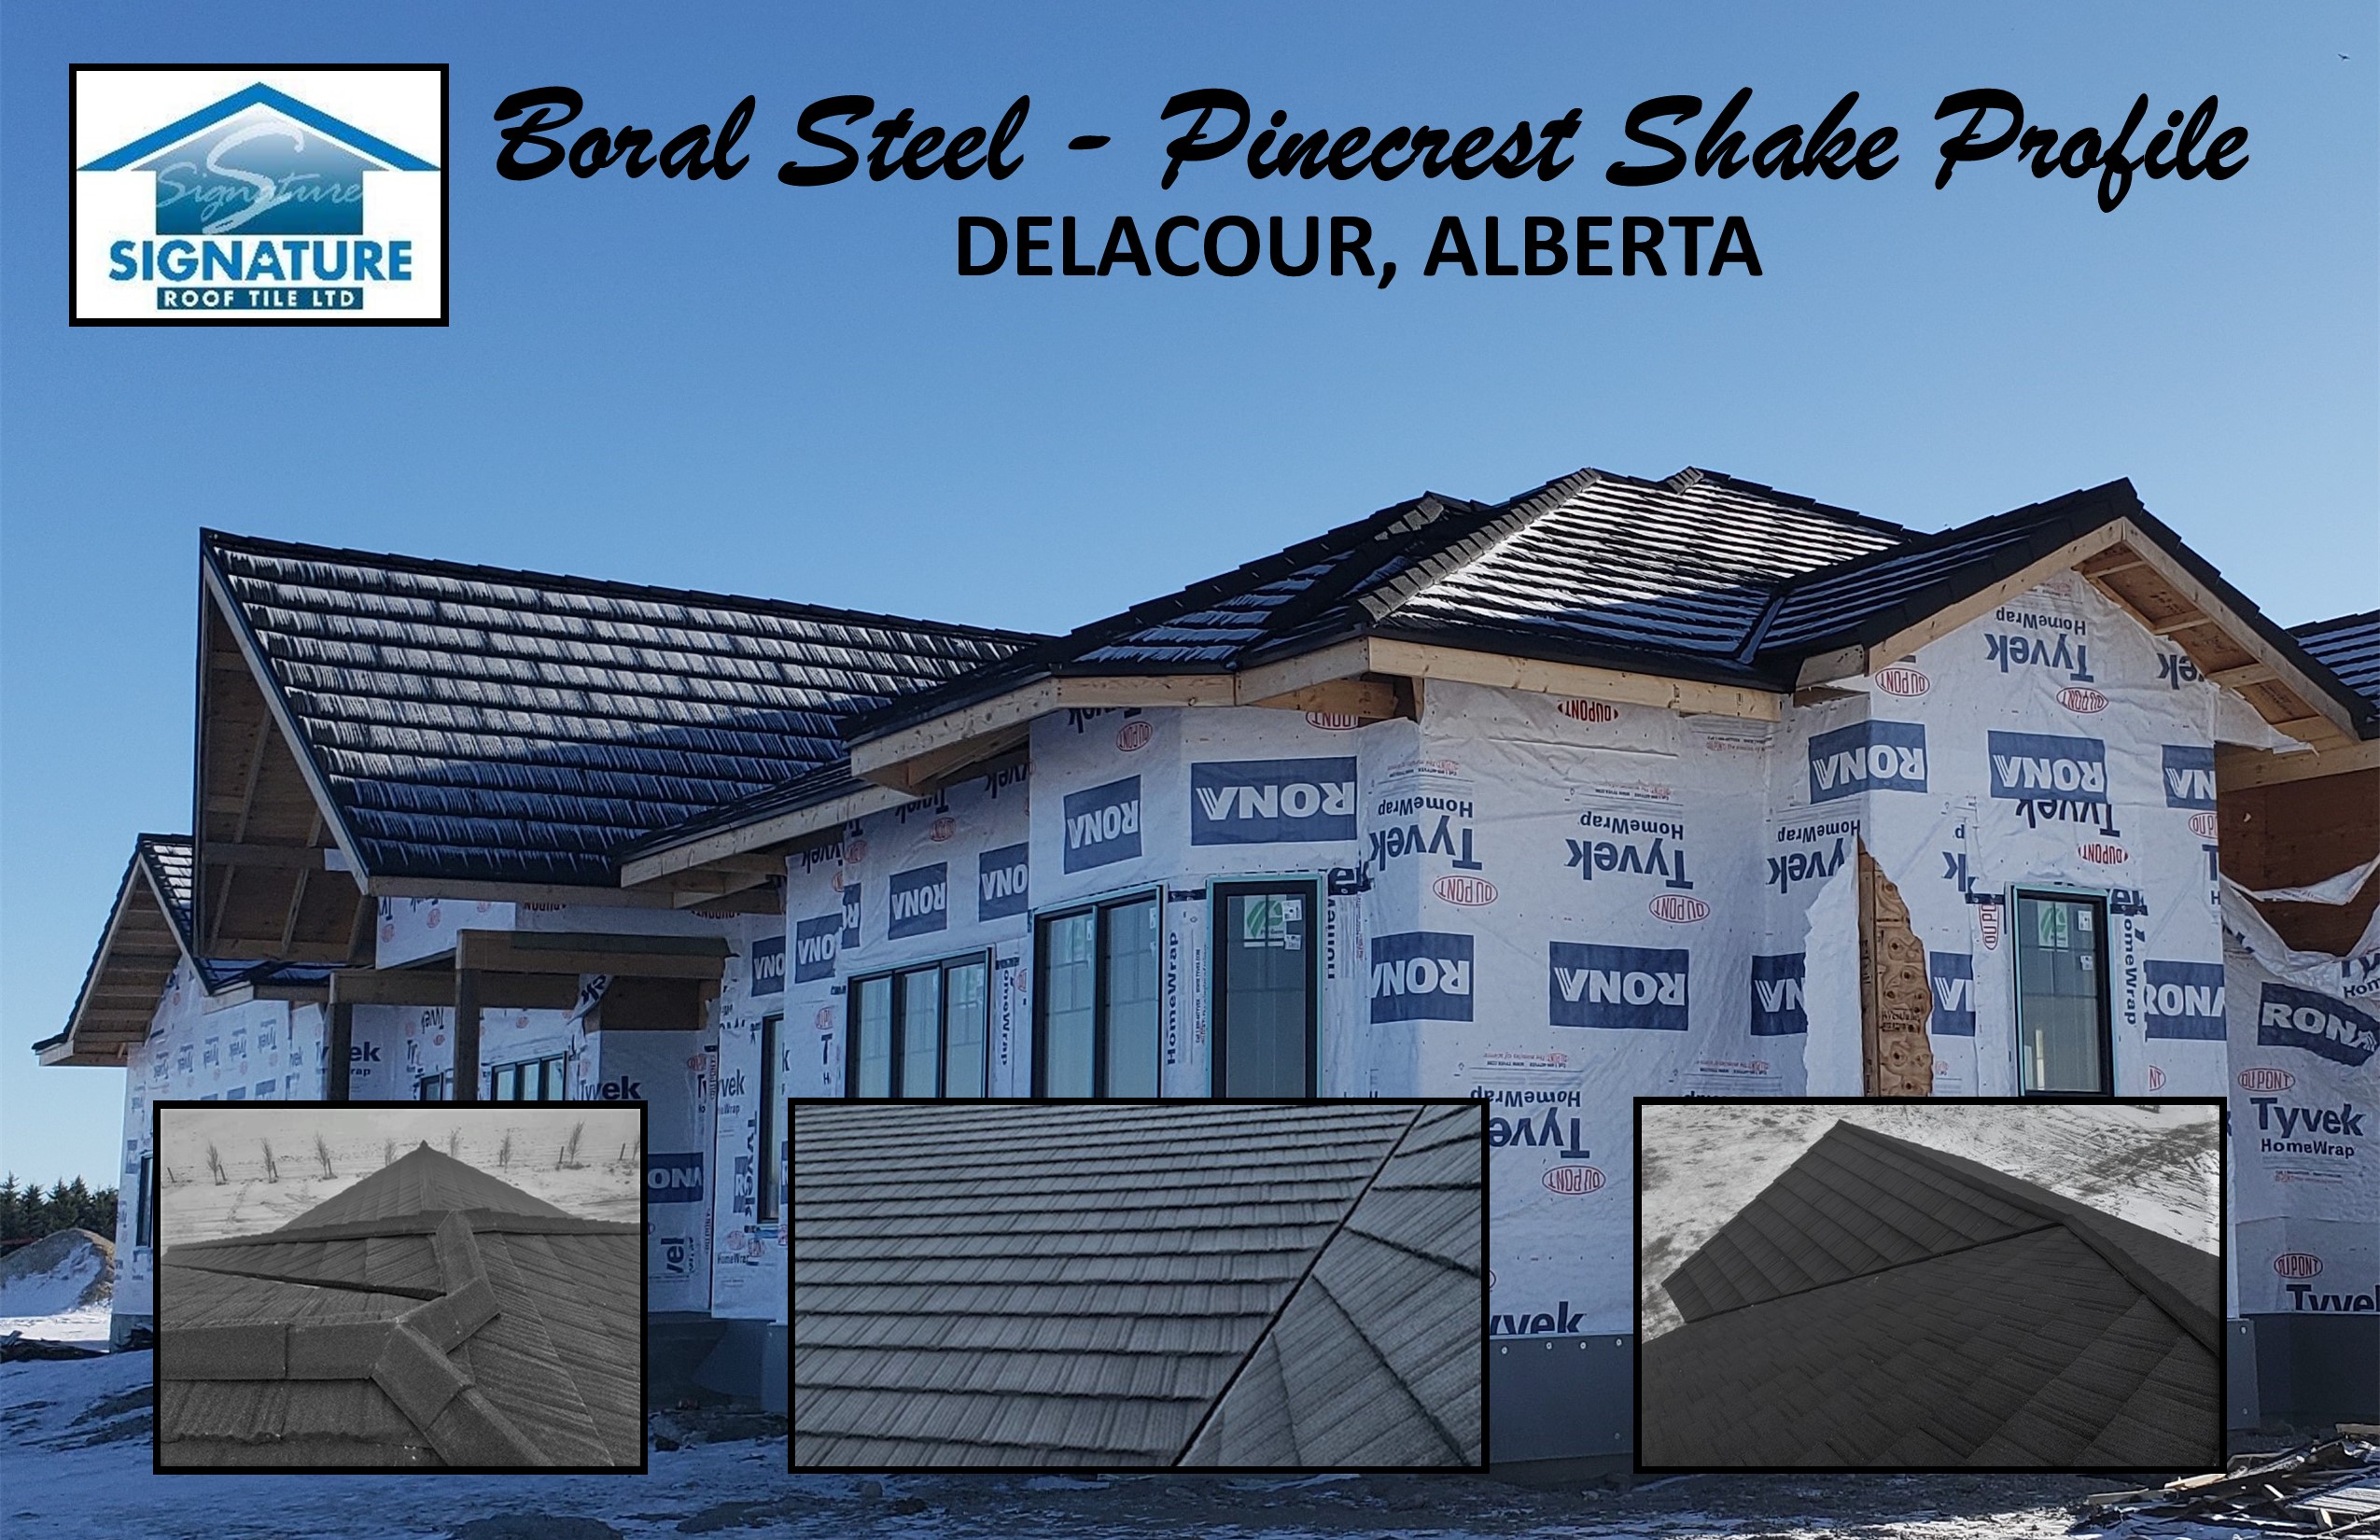 Boral Steel - Pinecrest Shake